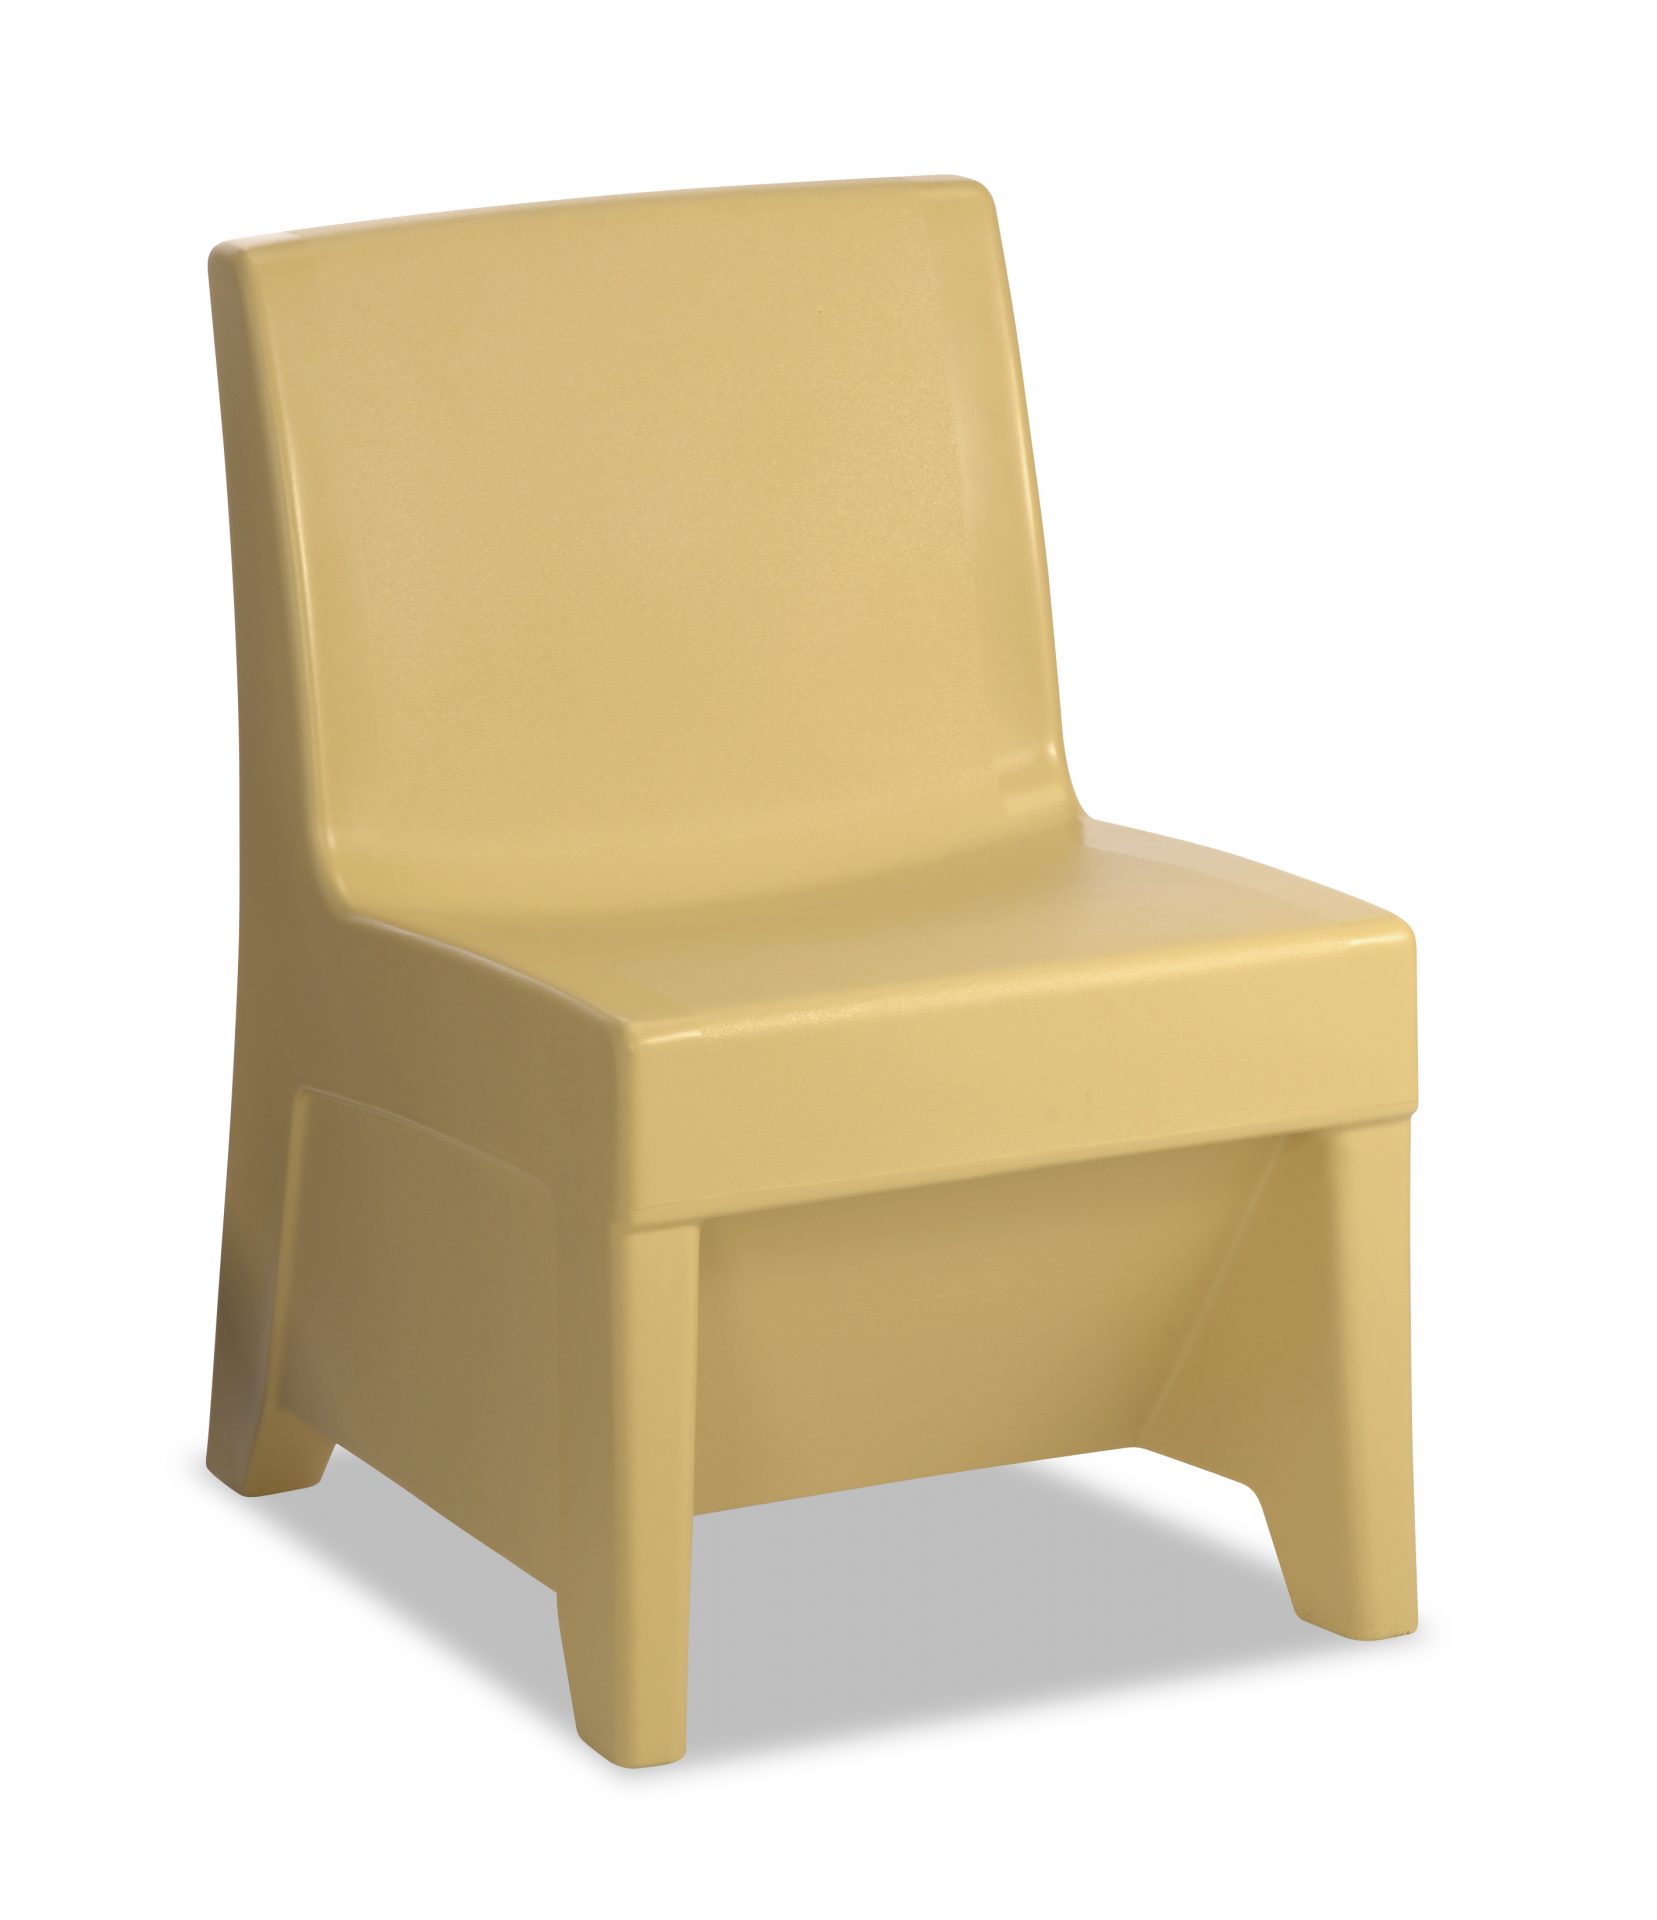 Mojave color ligature resistant chair